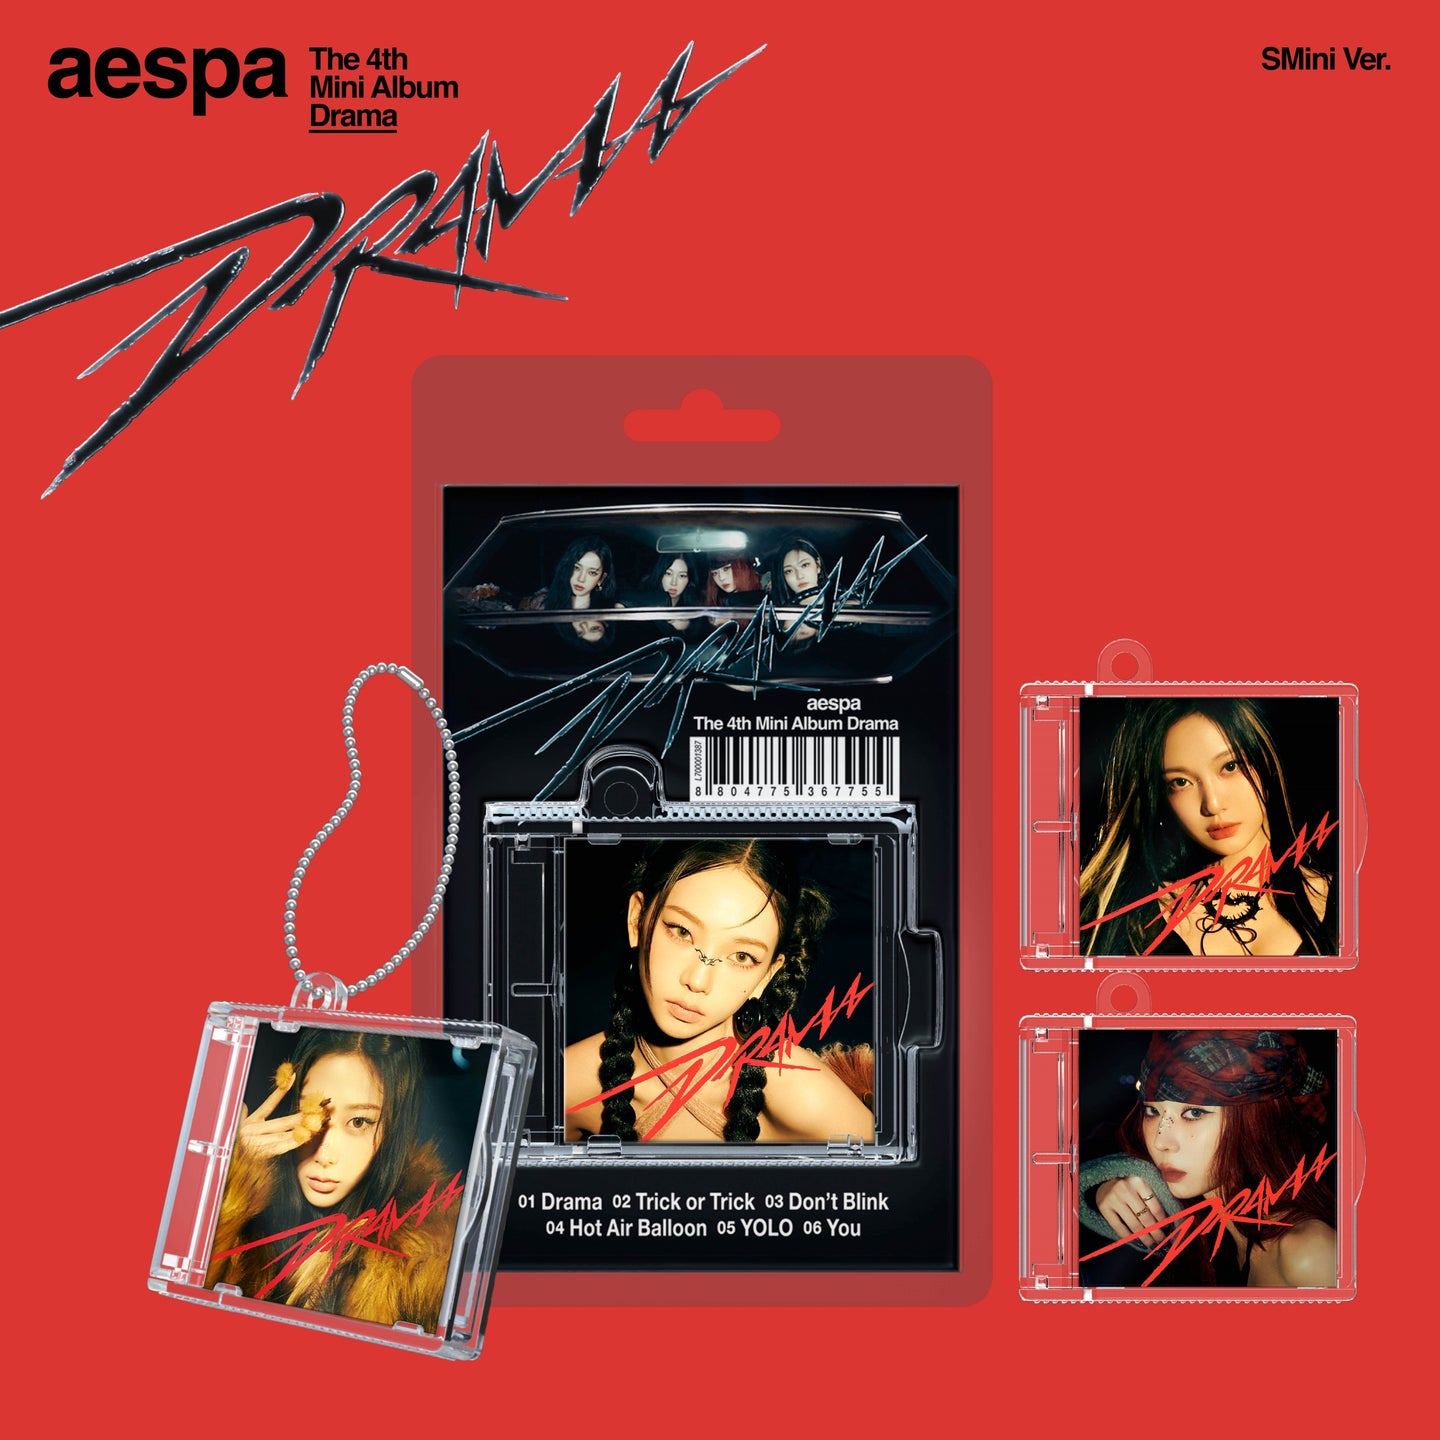 aespa Mini Album Vol. 4 – Drama (SMini Ver.) (Random)